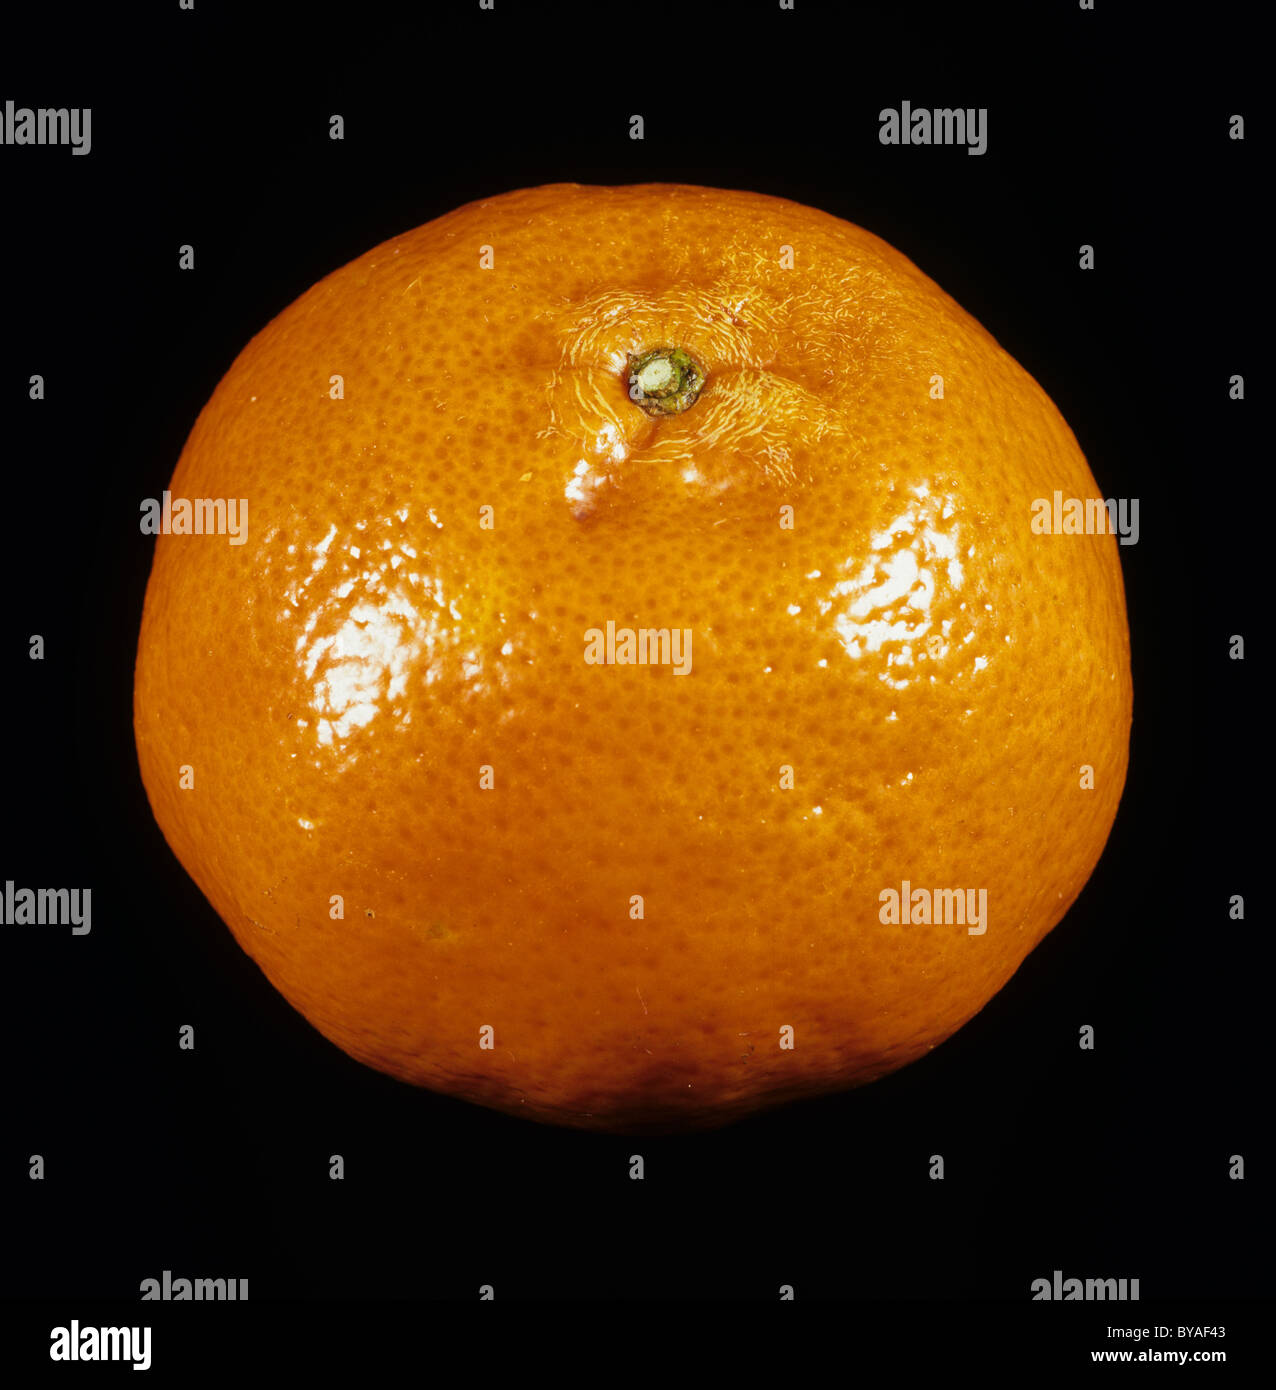 Whole tangerine fruit variety Dancy Stock Photo